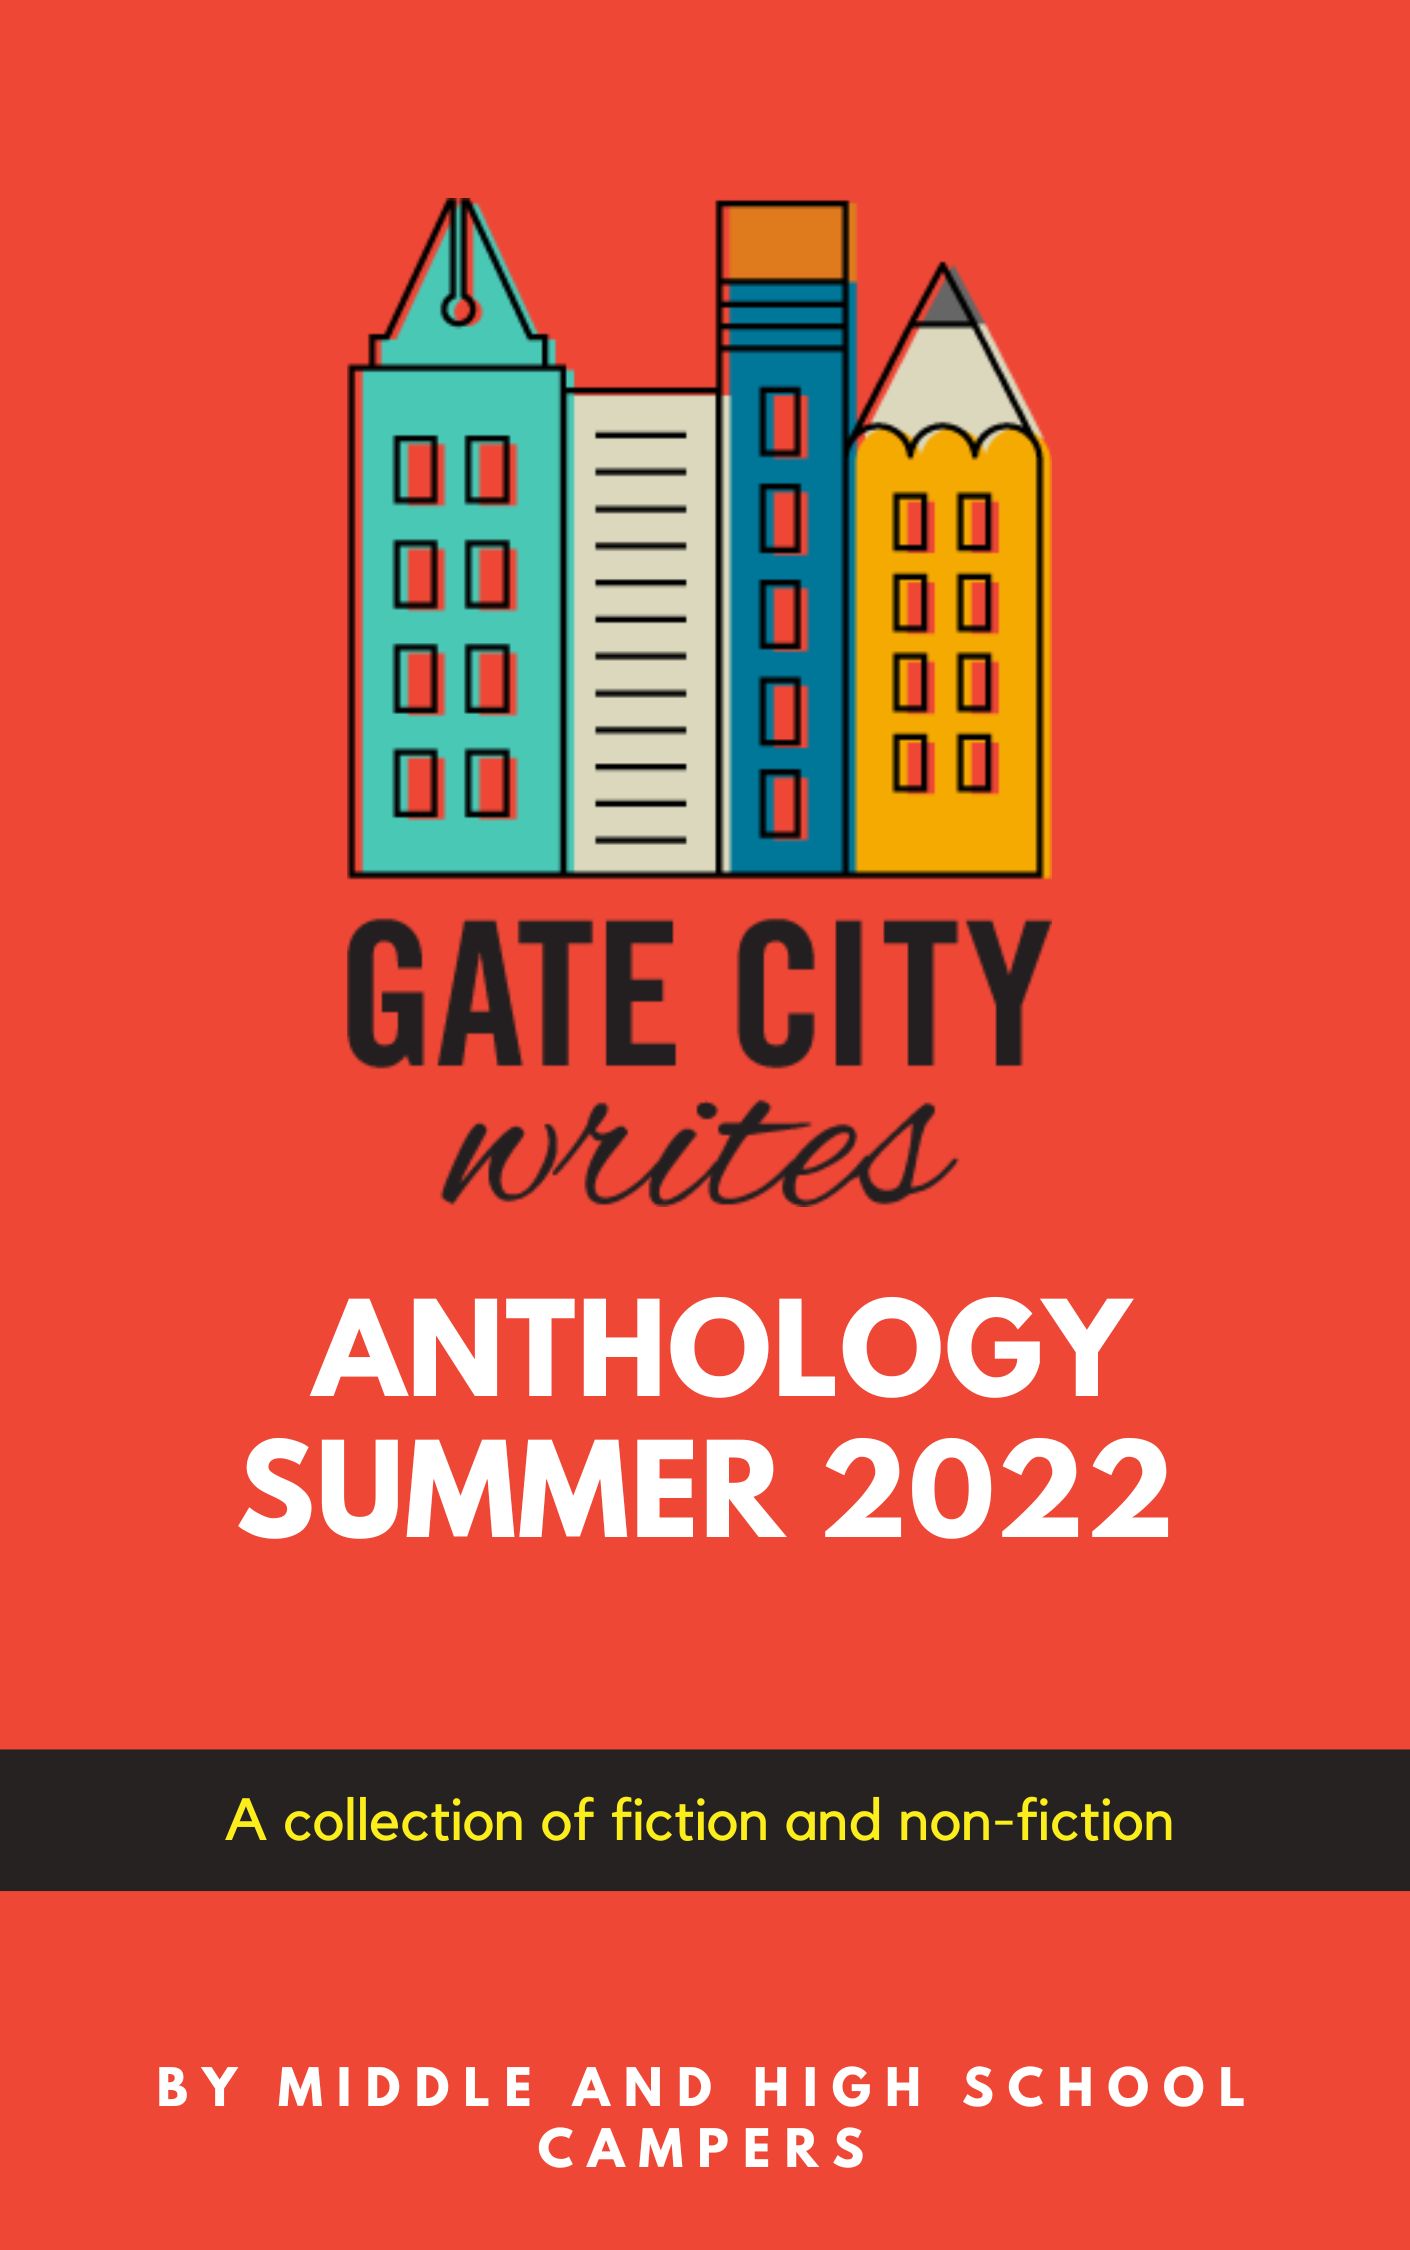 Decorative image to display Gate City Writes Anthology Summer 2022 student works